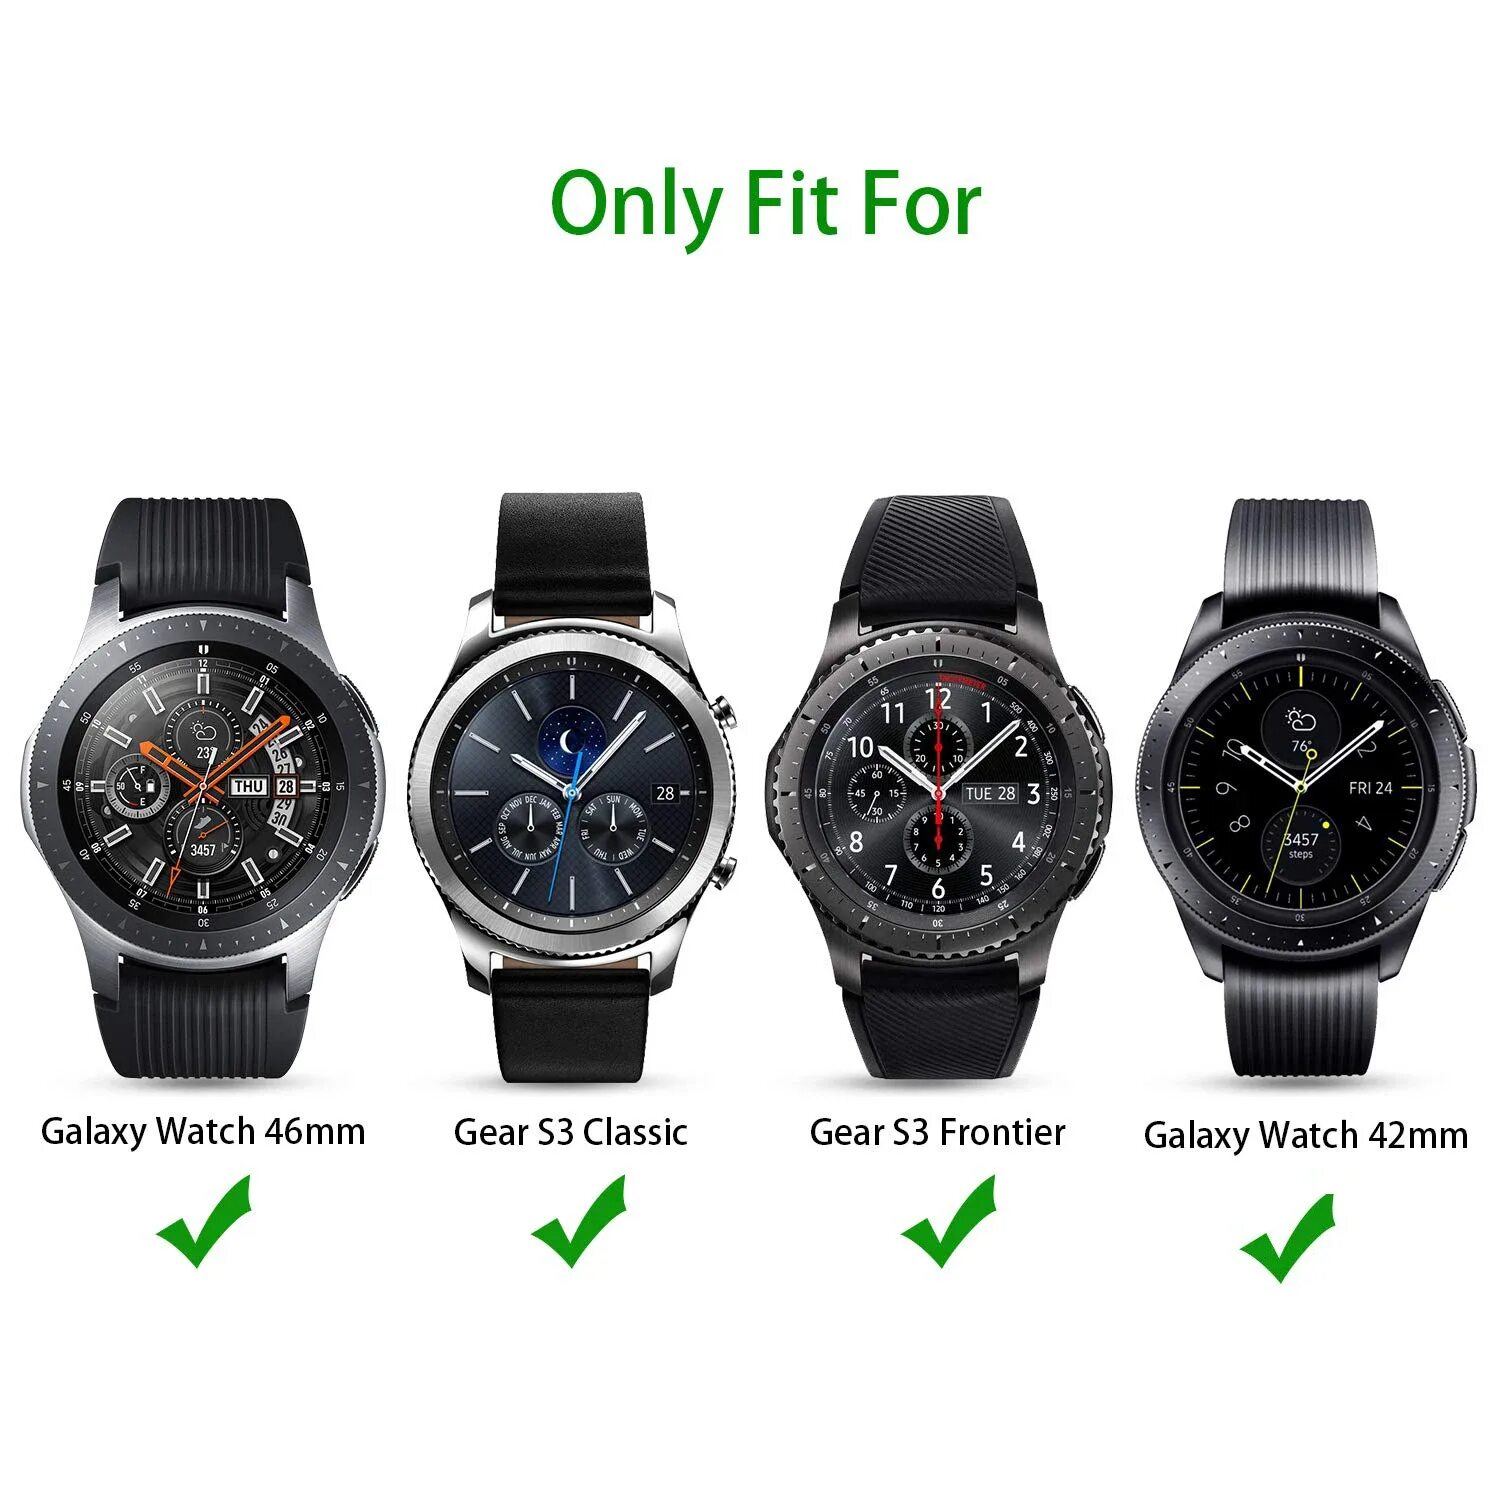 Samsung Galaxy watch Gear s3 Classic. Samsung Galaxy watch 46mm vs Gear s3. Samsung Galaxy watch 42мм. Samsung Galaxy watch 46mm. Samsung galaxy watch сравнение